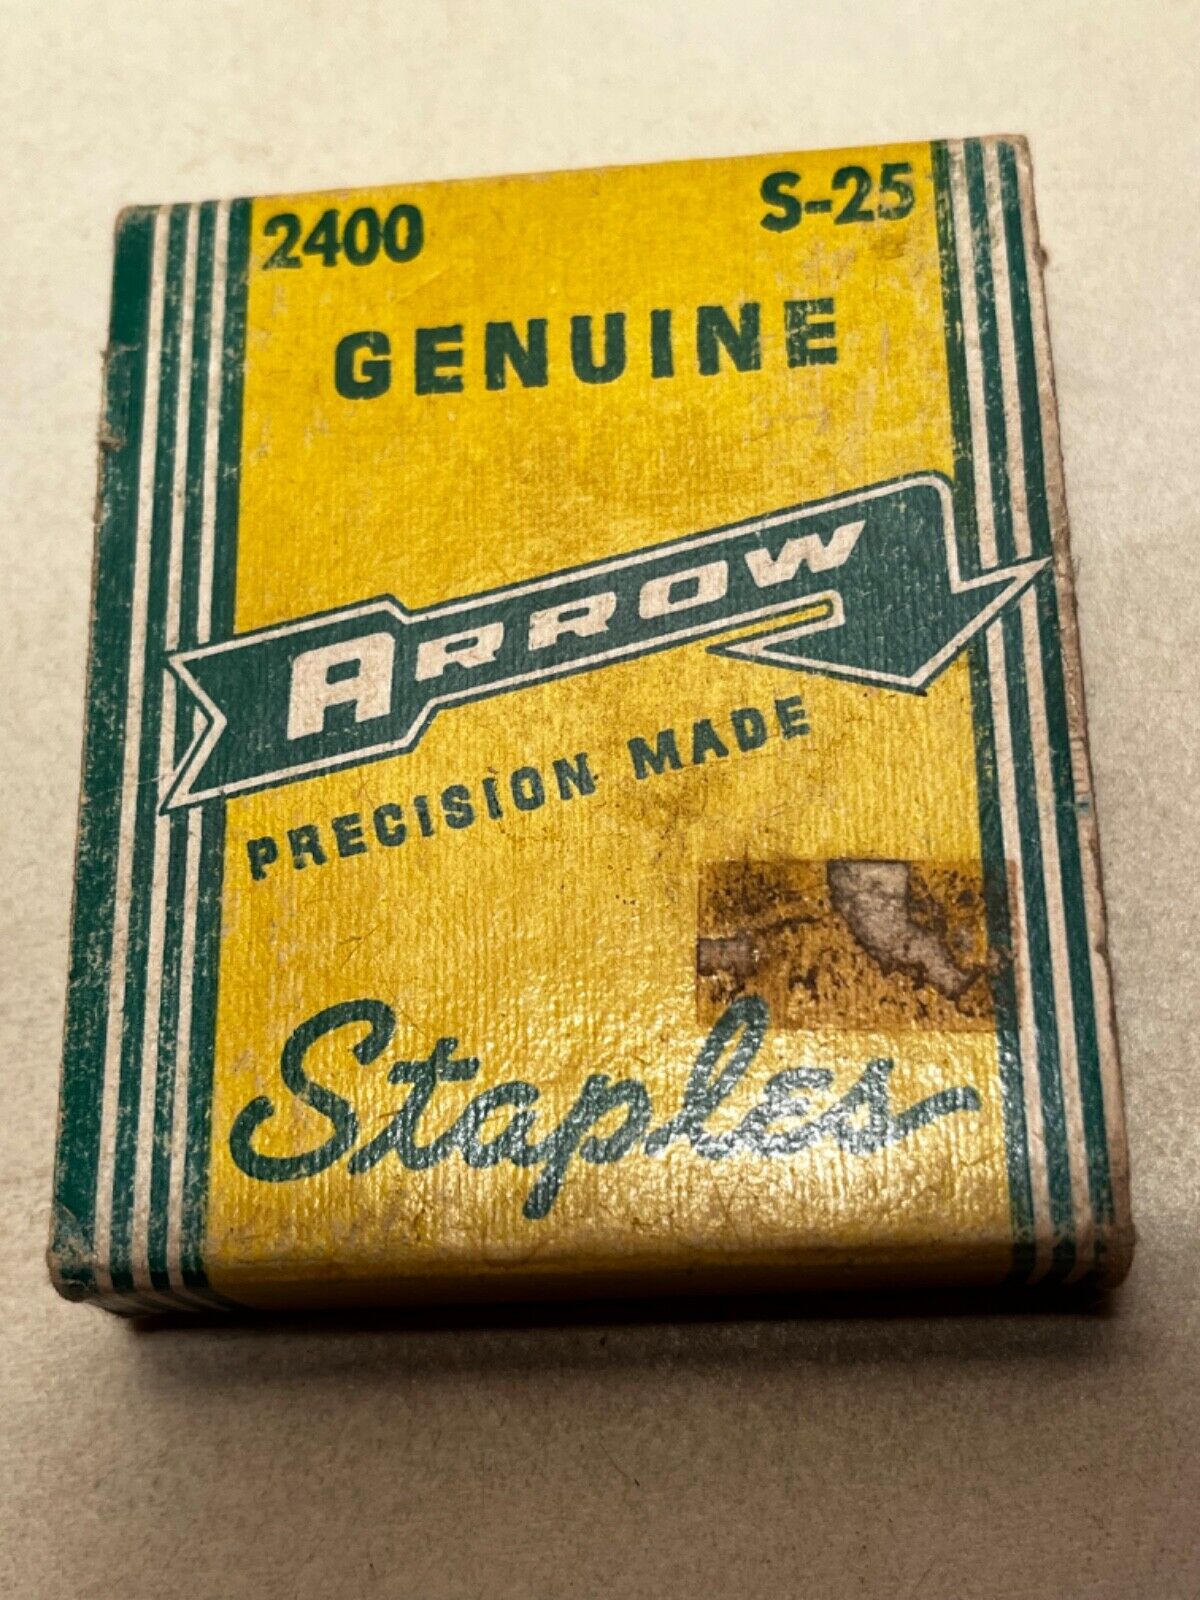 Vintage Genuine Arrow Staples in original box NOS  S-25 2400 count